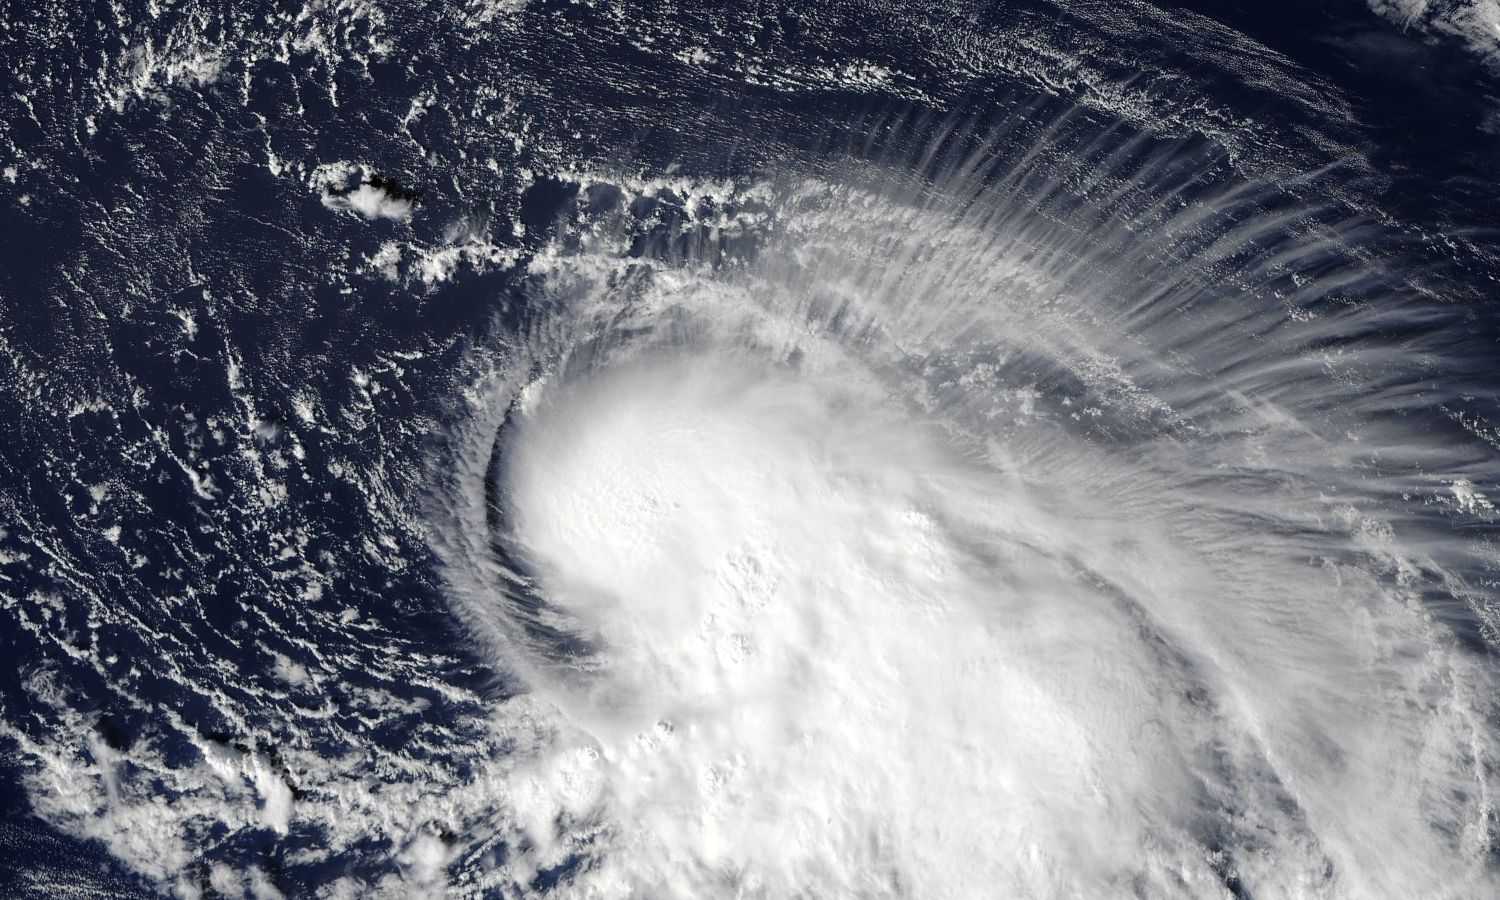 OTD in 2005: Tropical Storm Zeta formed in the open Atlantic Ocean.